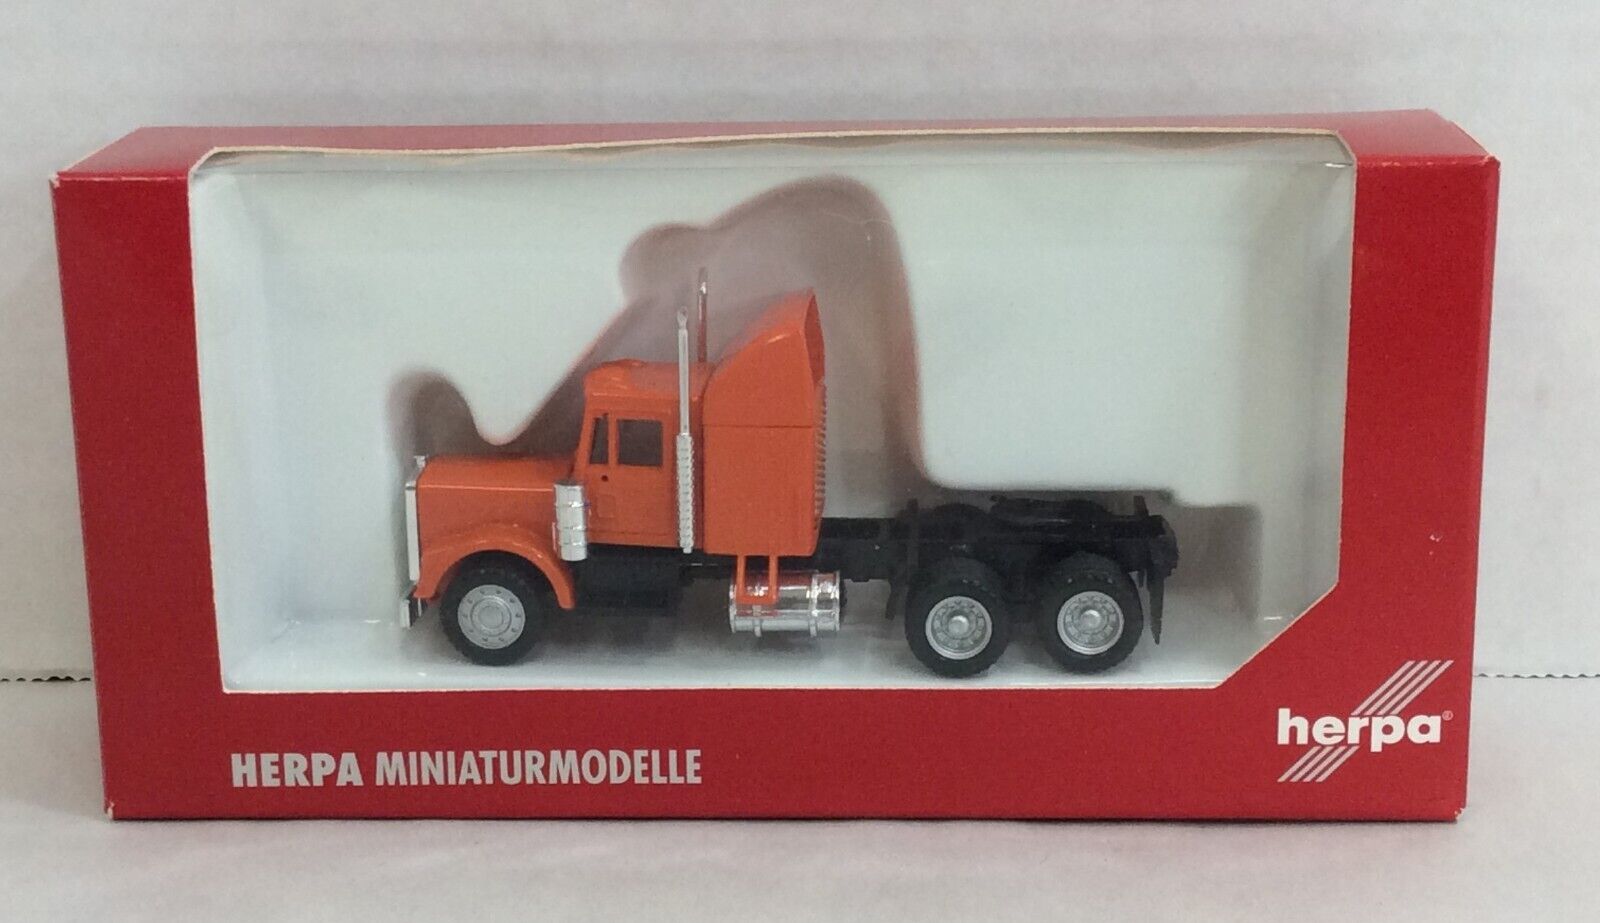 Herpa Truck Miniaturmodelle 1/87 Scale Orange Semi Rig New Open Box 2528